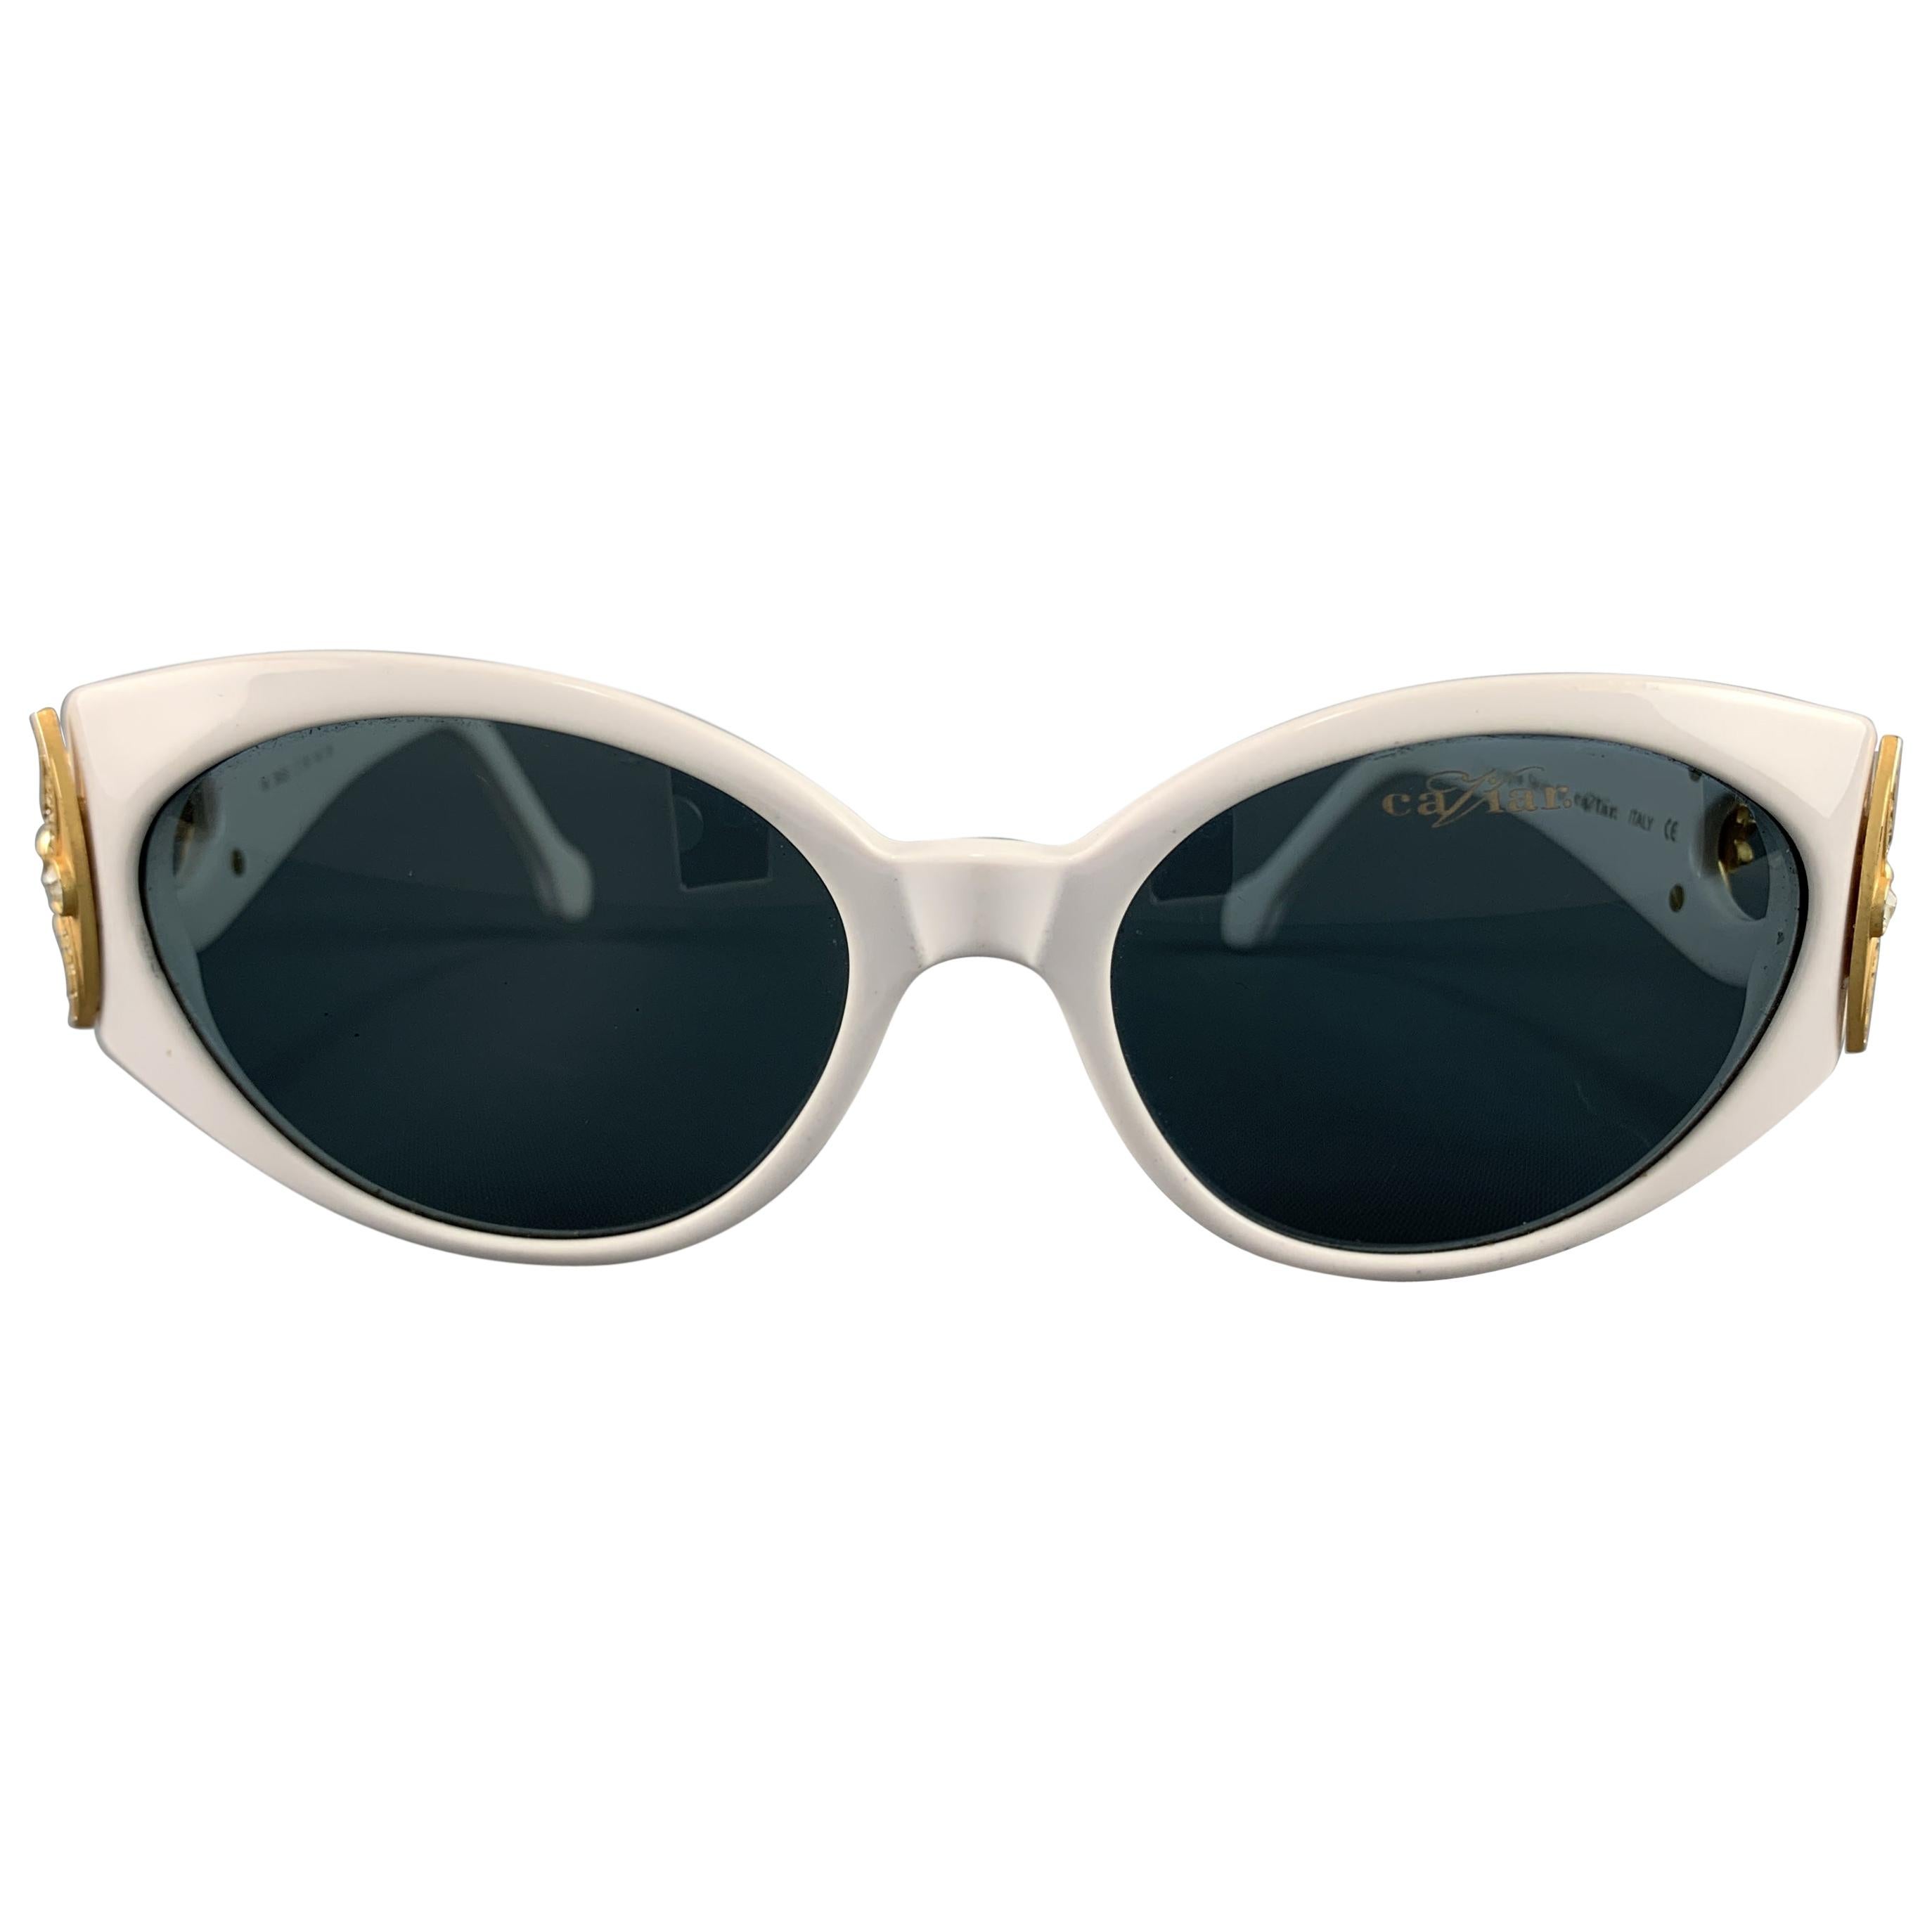 CAVIAR White & Gold Tone Metal Swarovsi Crystal Sunglasses